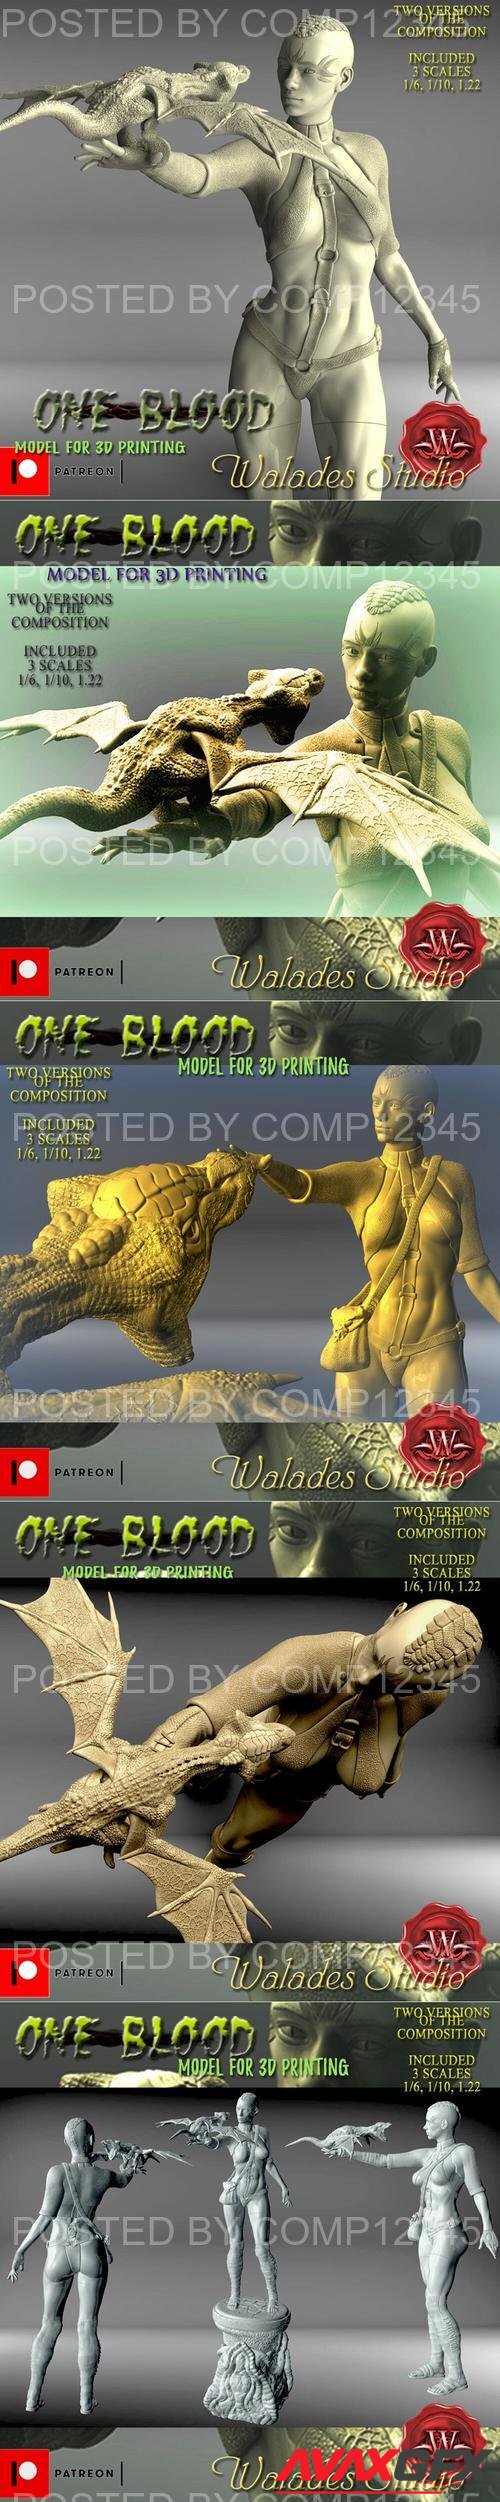 Walades Studio - One Blood 3D Print